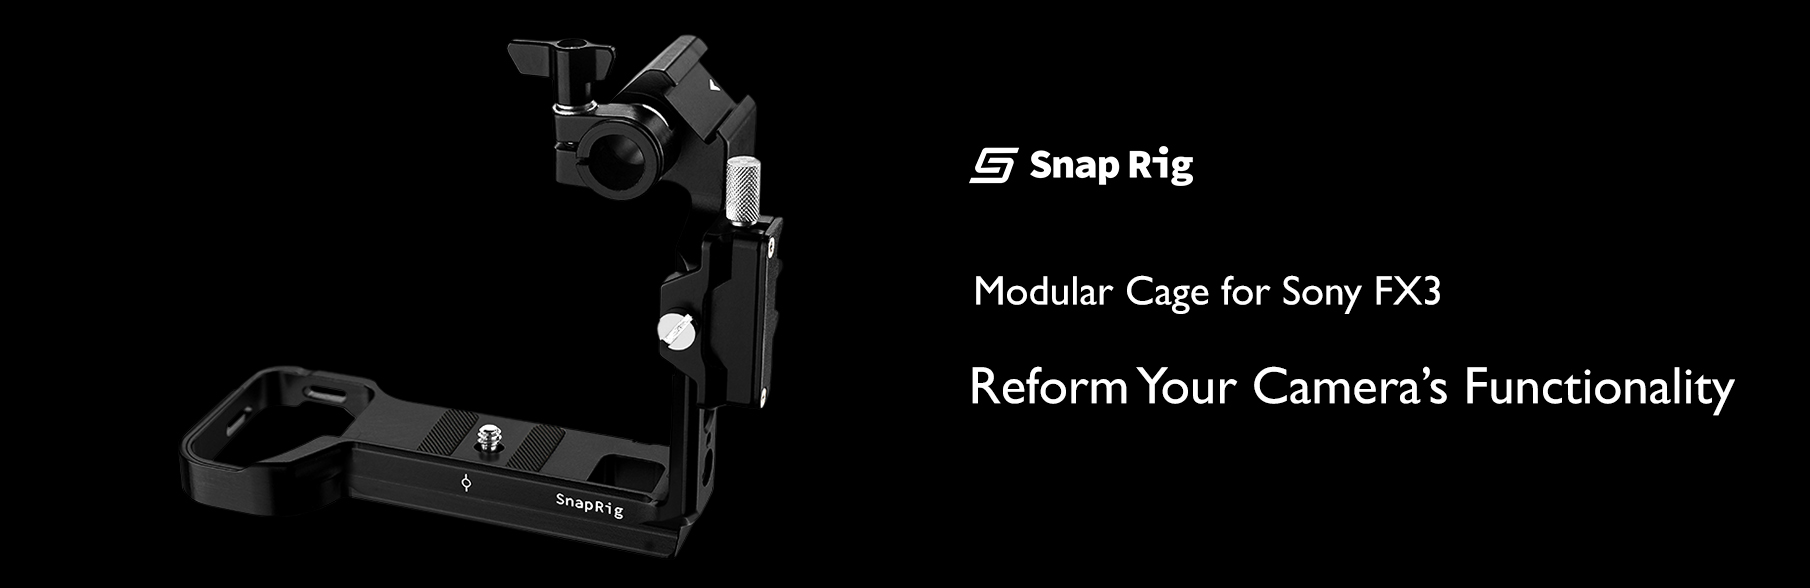 Proaim SnapRig Half Cage for SONY FX3 Camera. CG251